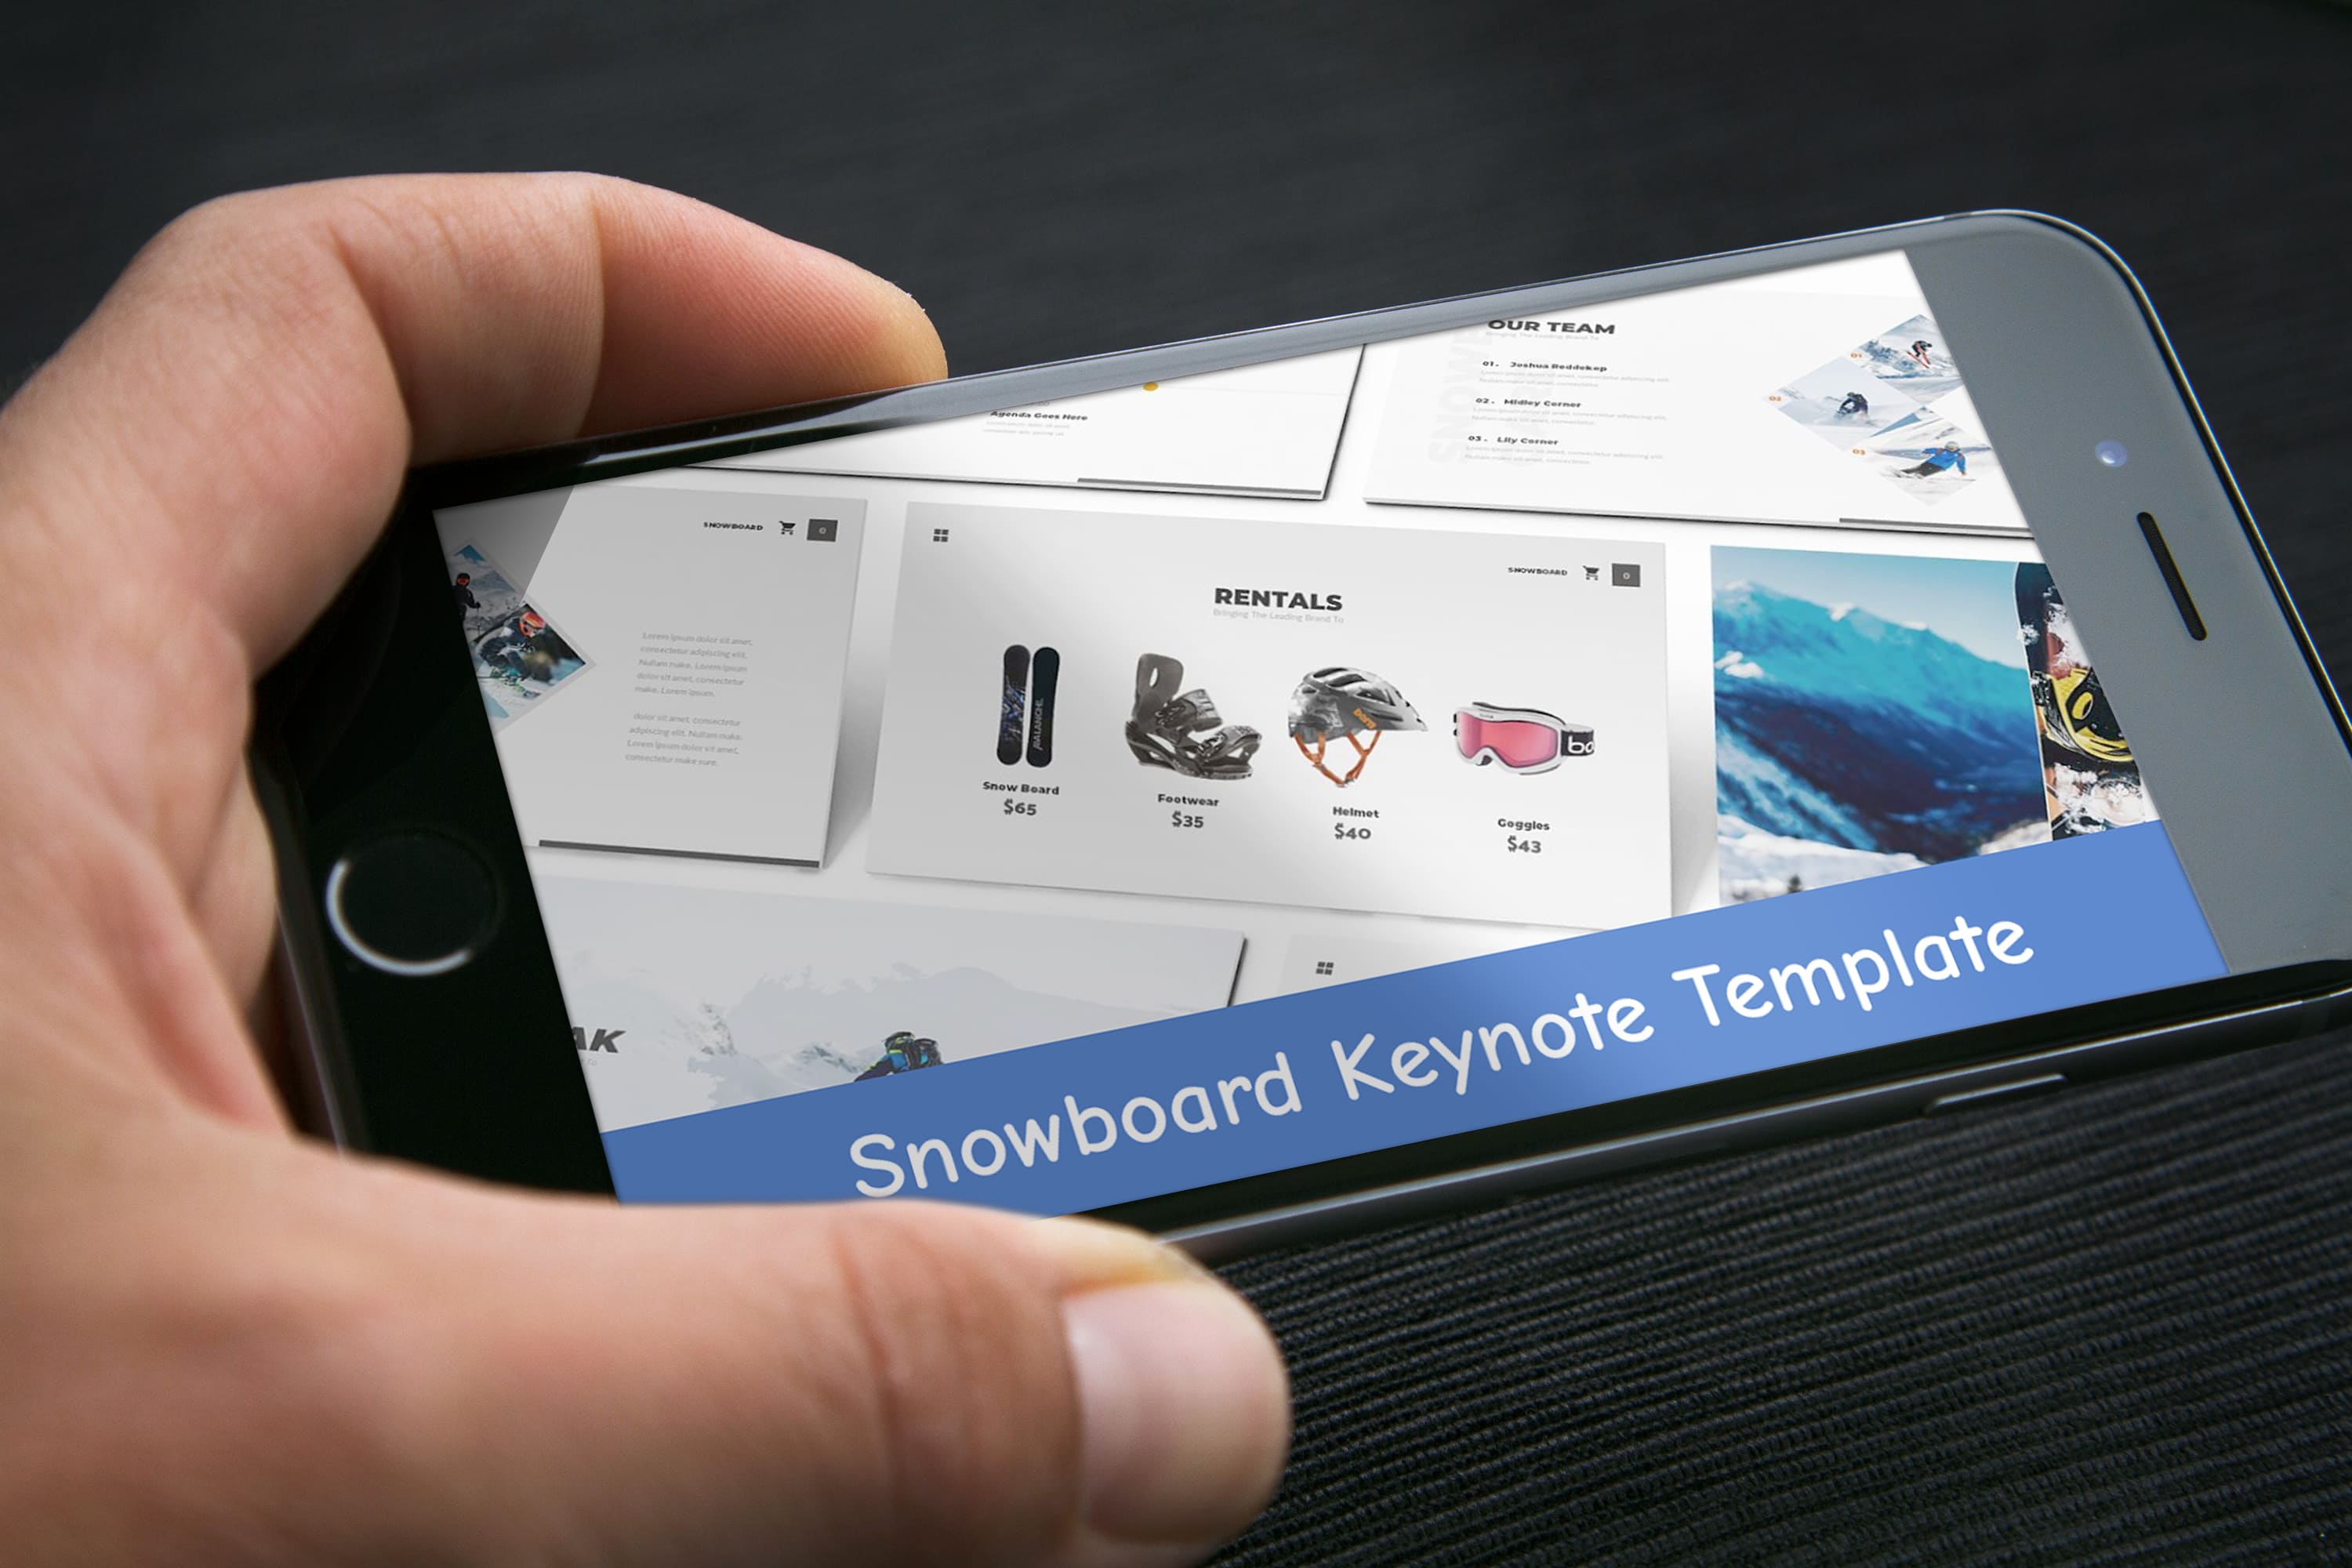 Snowboard Keynote Template - Mockup on Smartphone.